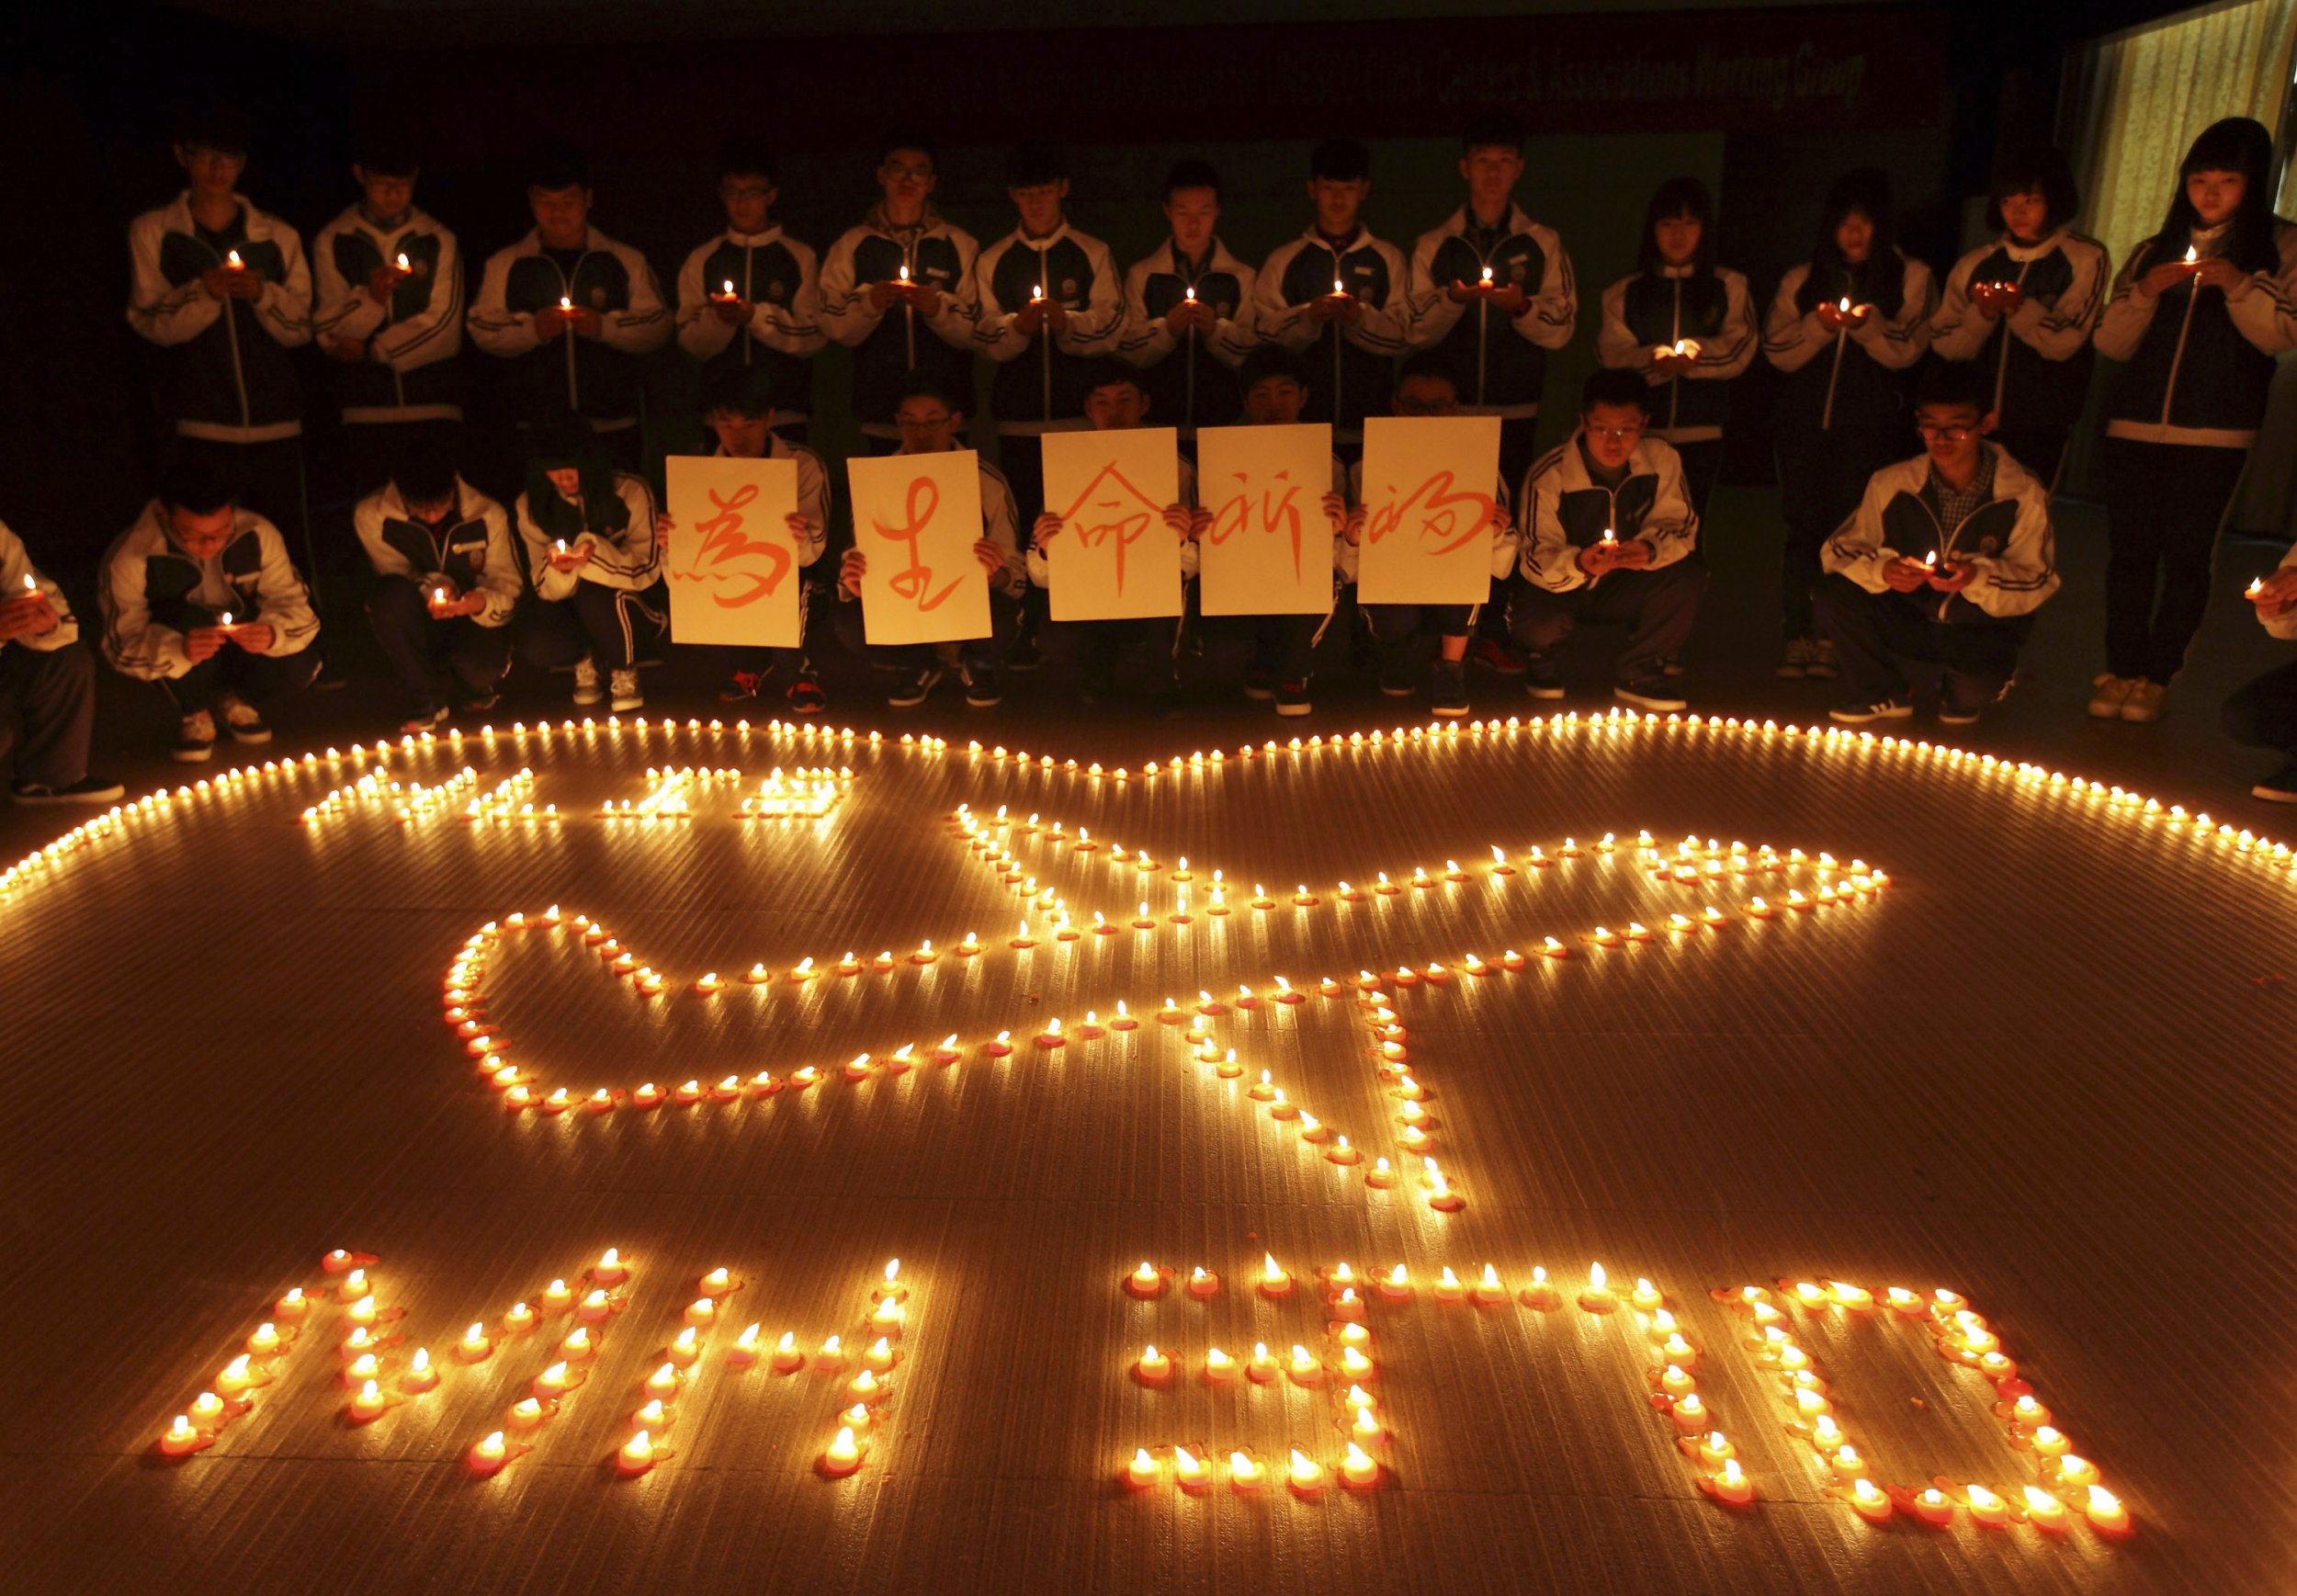 MH370 vigil